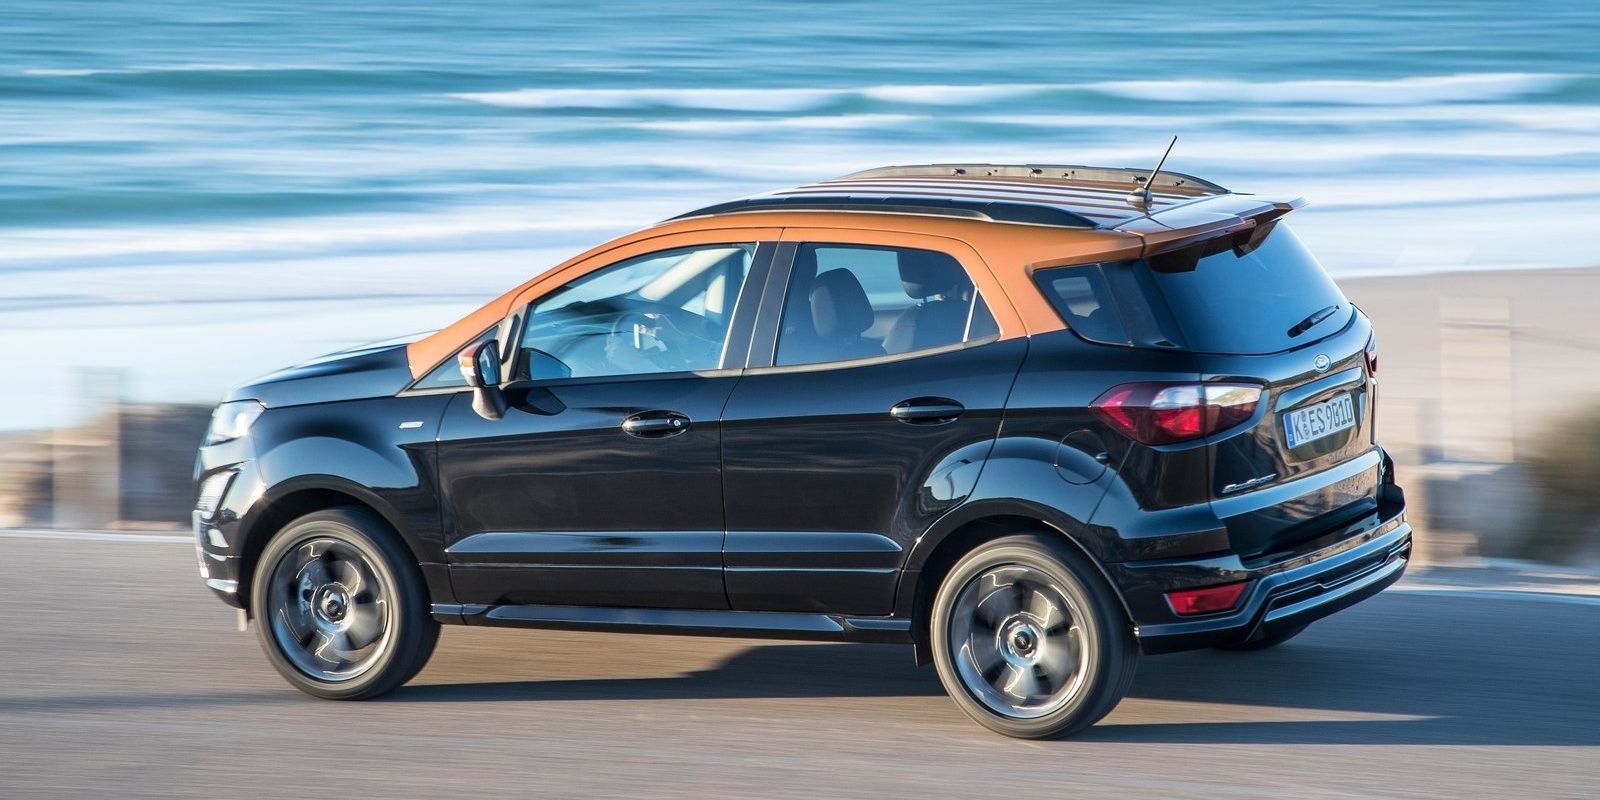 Ford EcoSport side profile on a coastal road